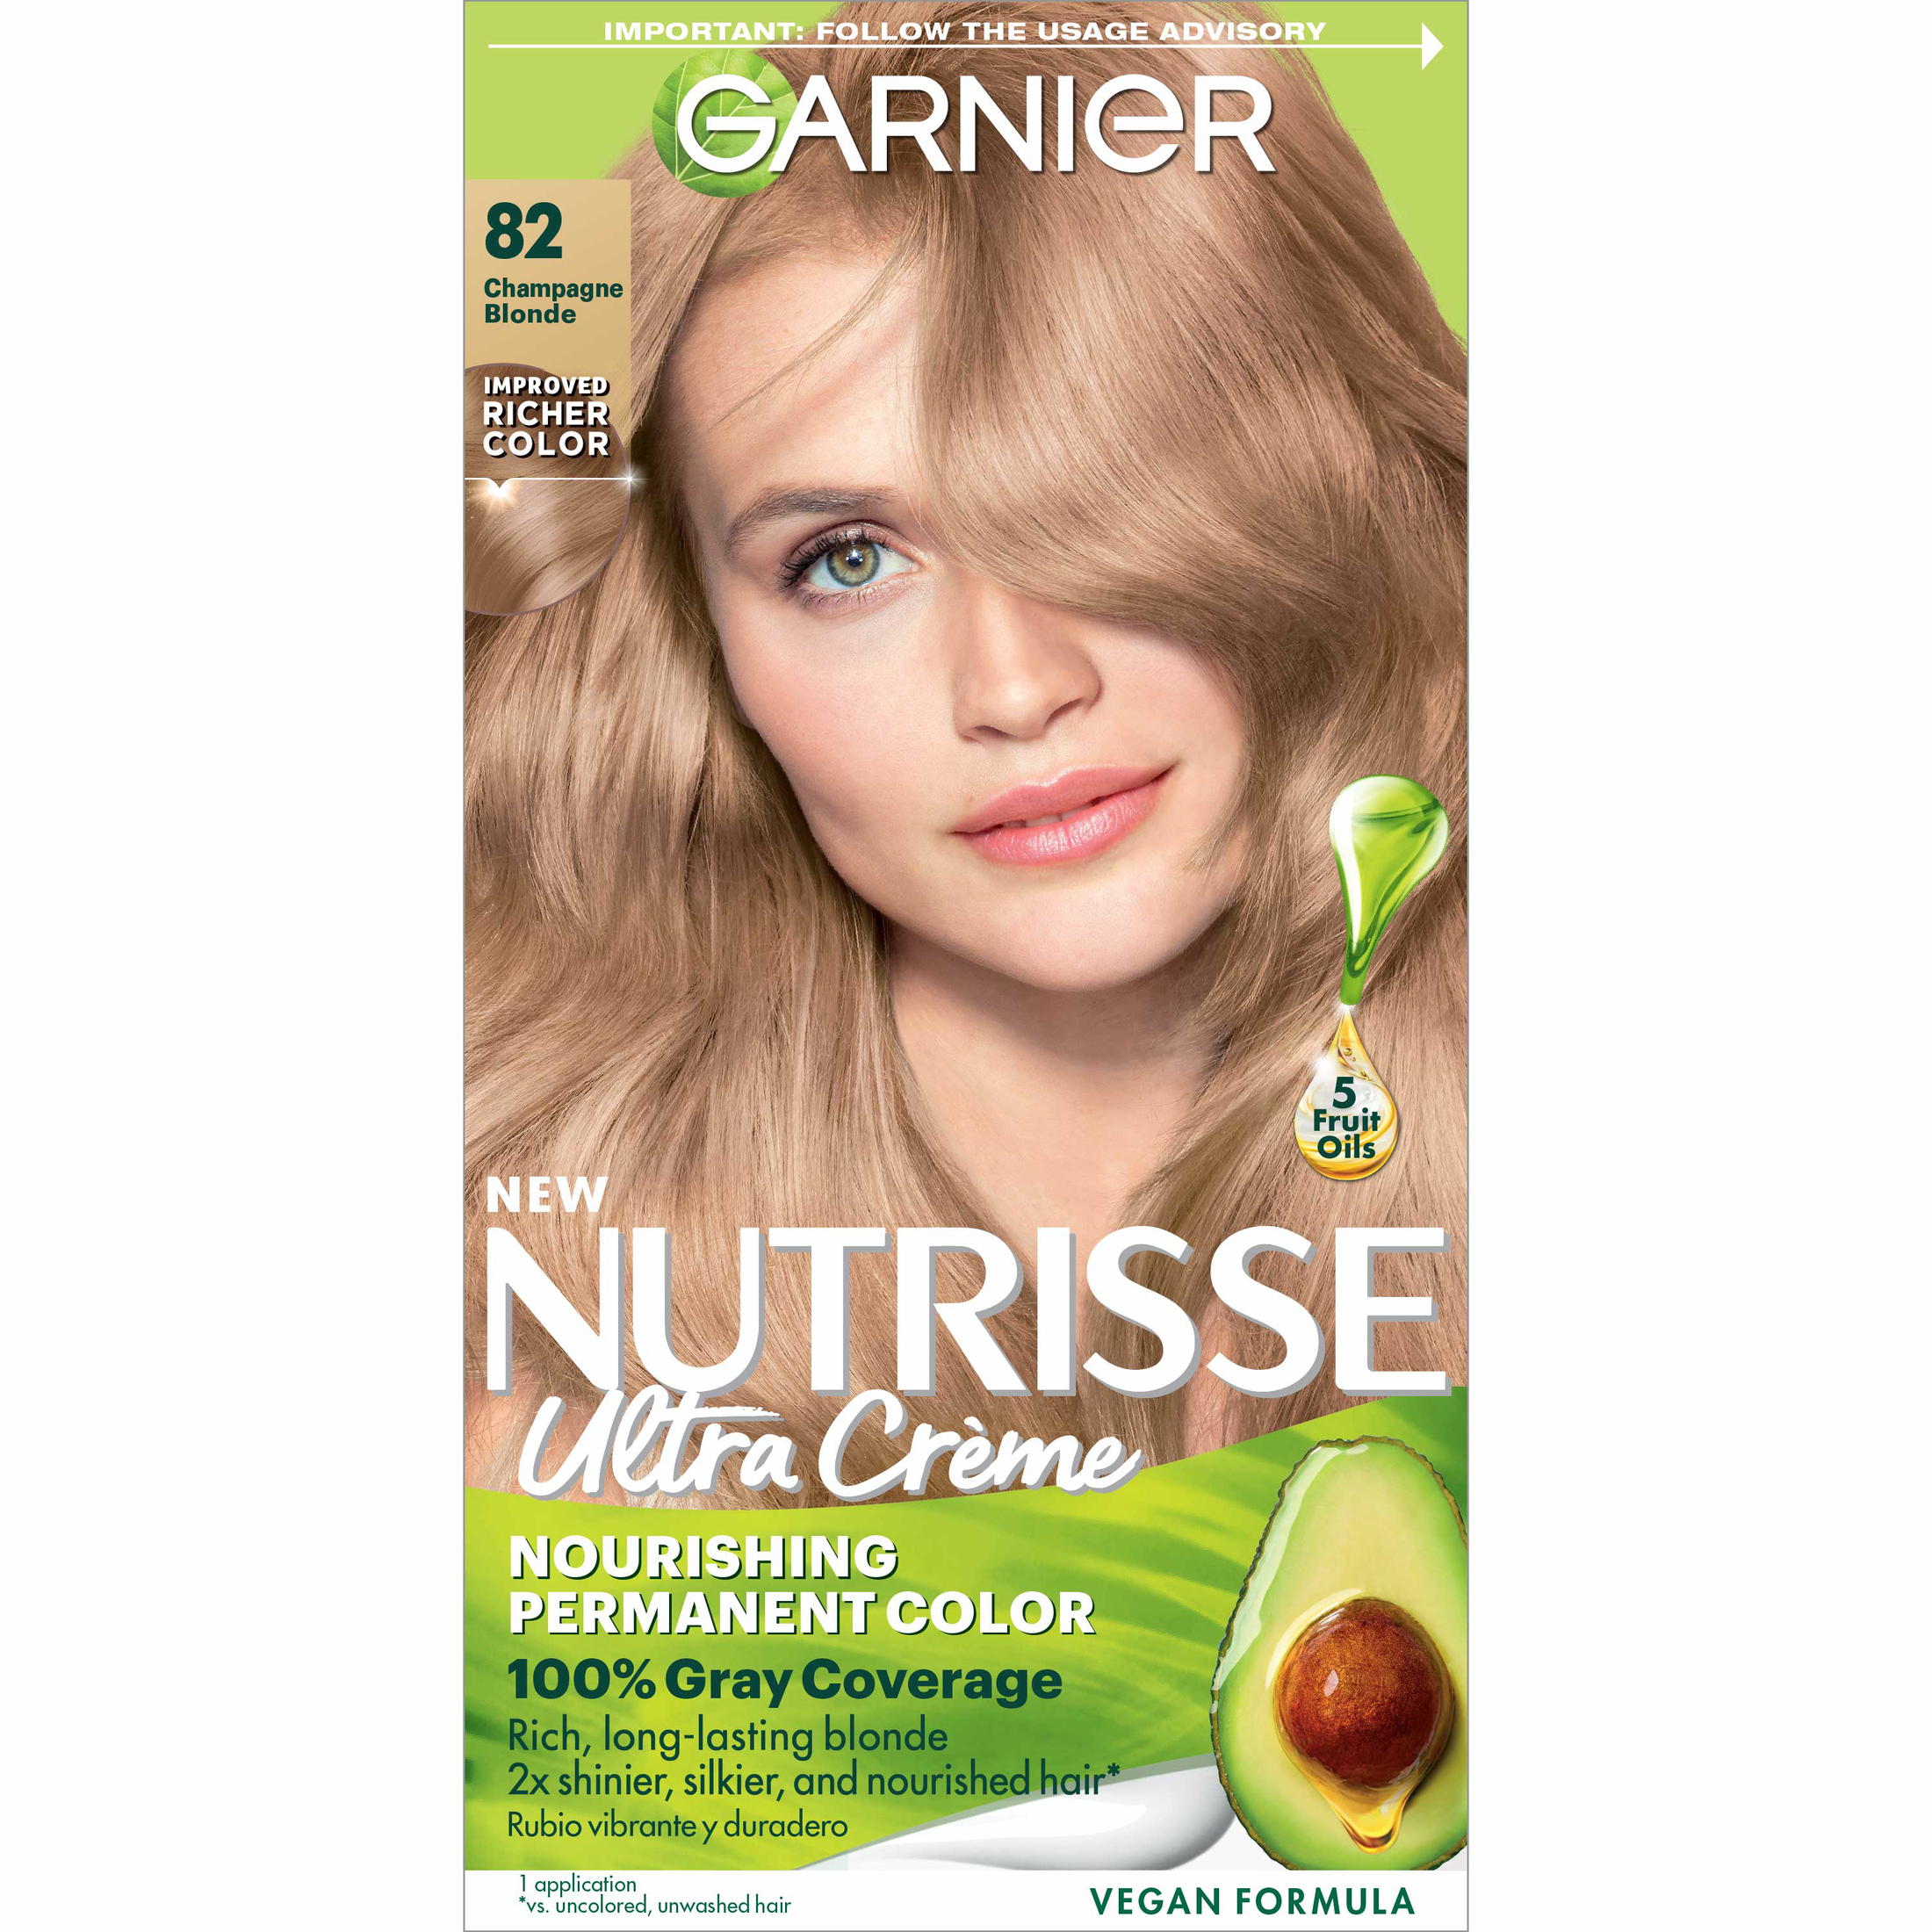 Garnier Nutrisse Nourishing Hair Color Creme, 082 Champagne Blonde - image 1 of 10